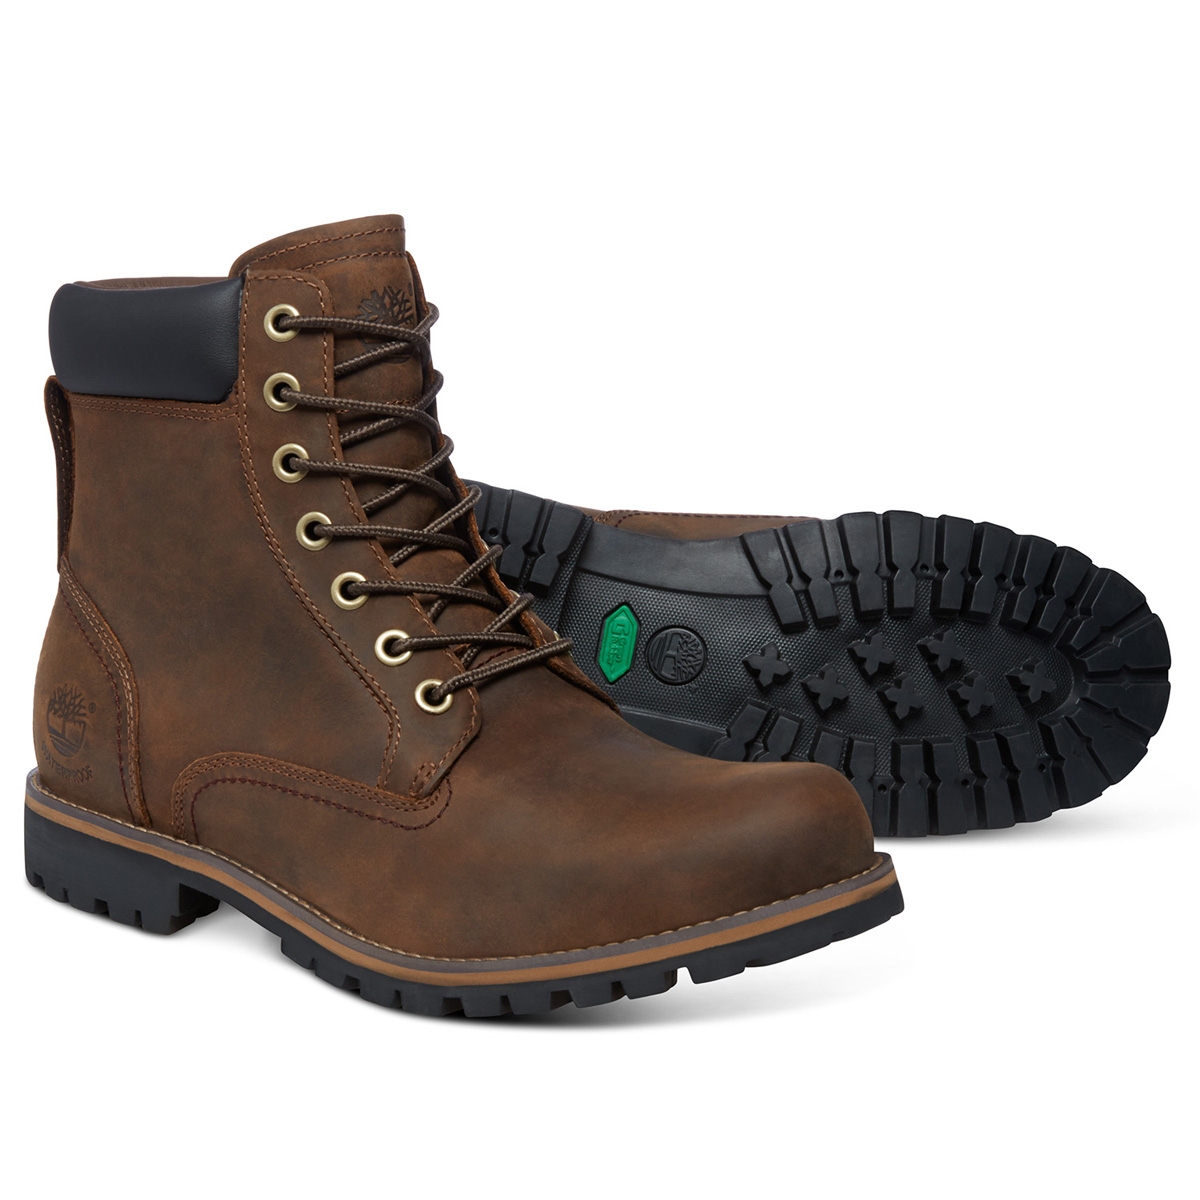 rugged timberland boots